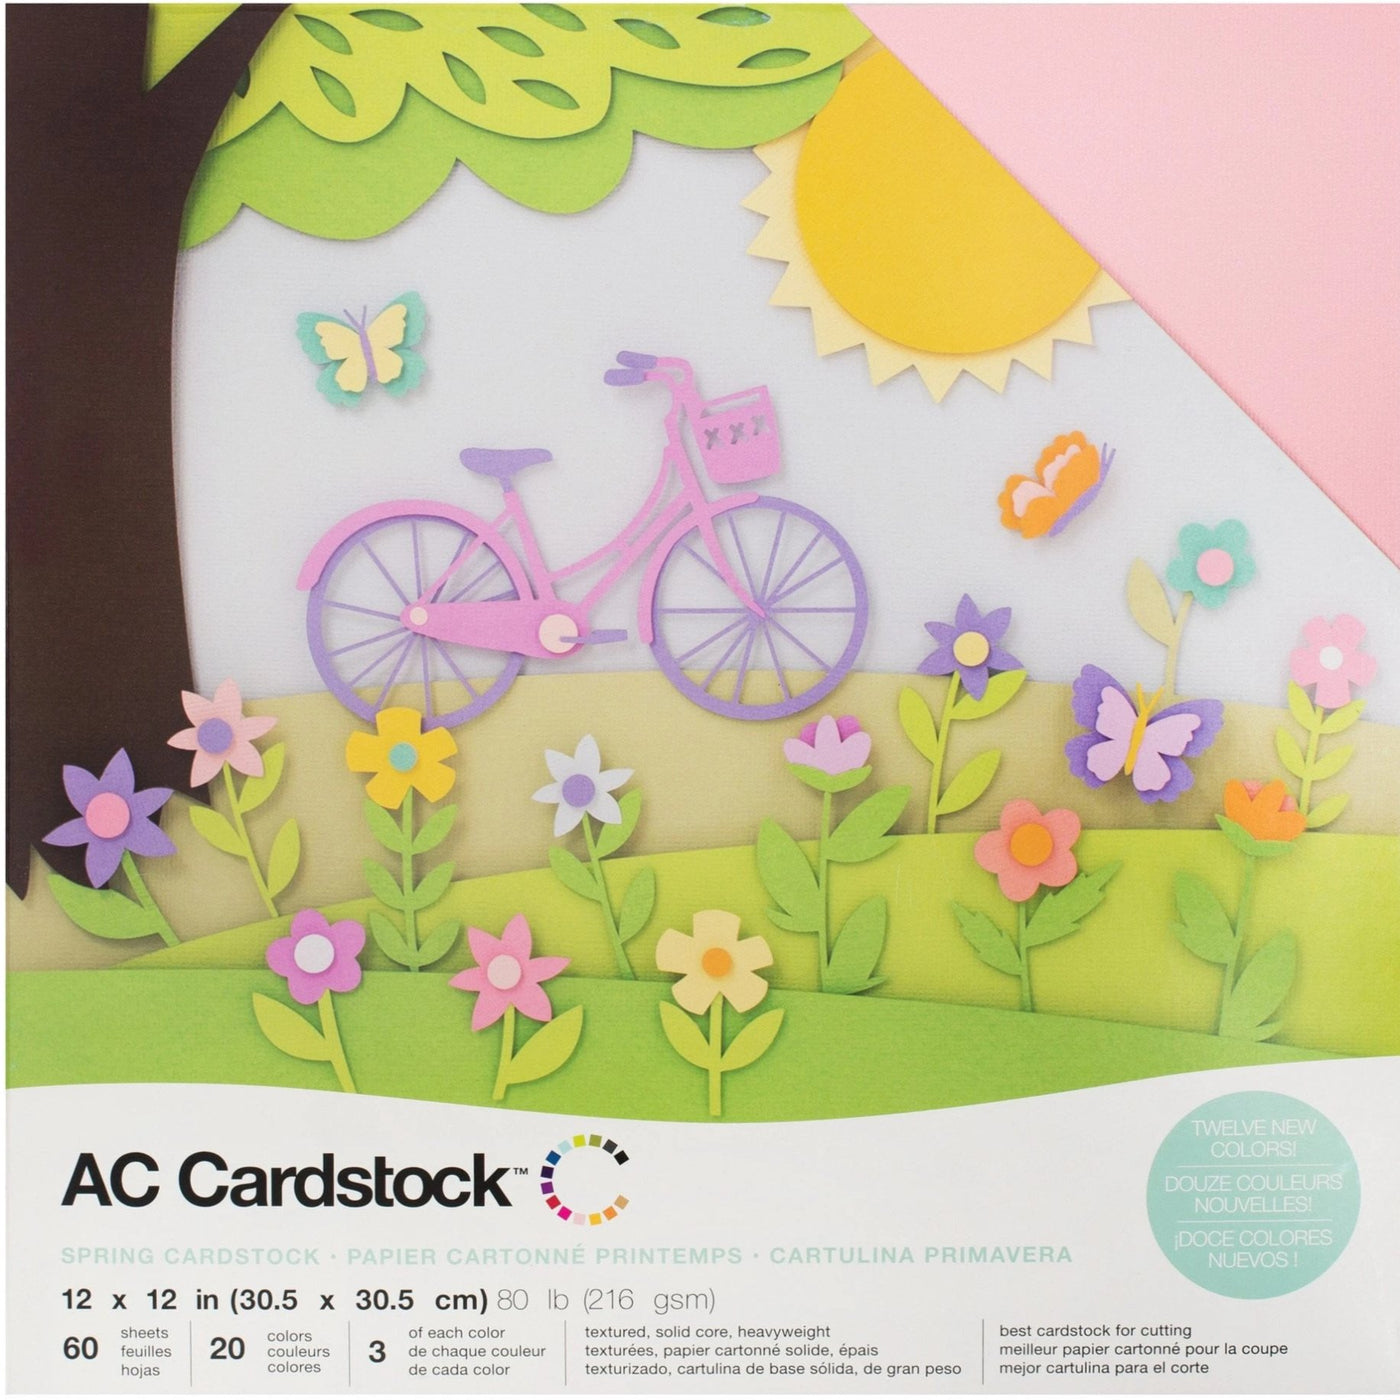 American Crafts Precision Cardstock Pack 80lb 12x12 60/Pkg - Pastel/Textured